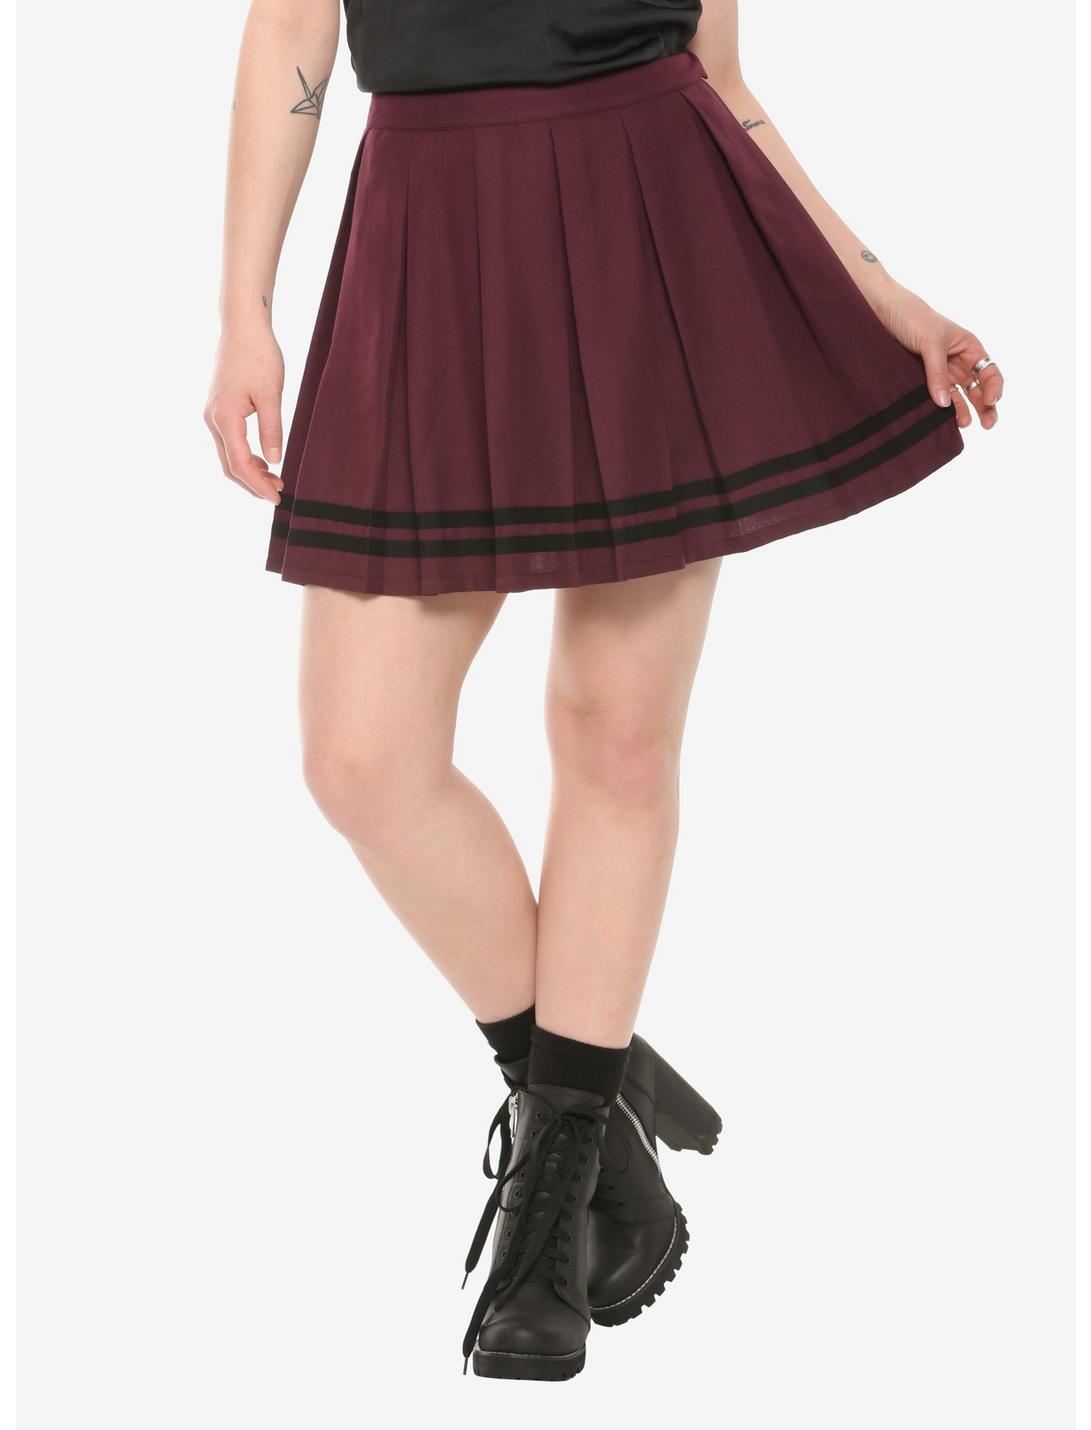 Burgundy With Black Stripe Pleated Skirt, BURGUNDY, hi-res